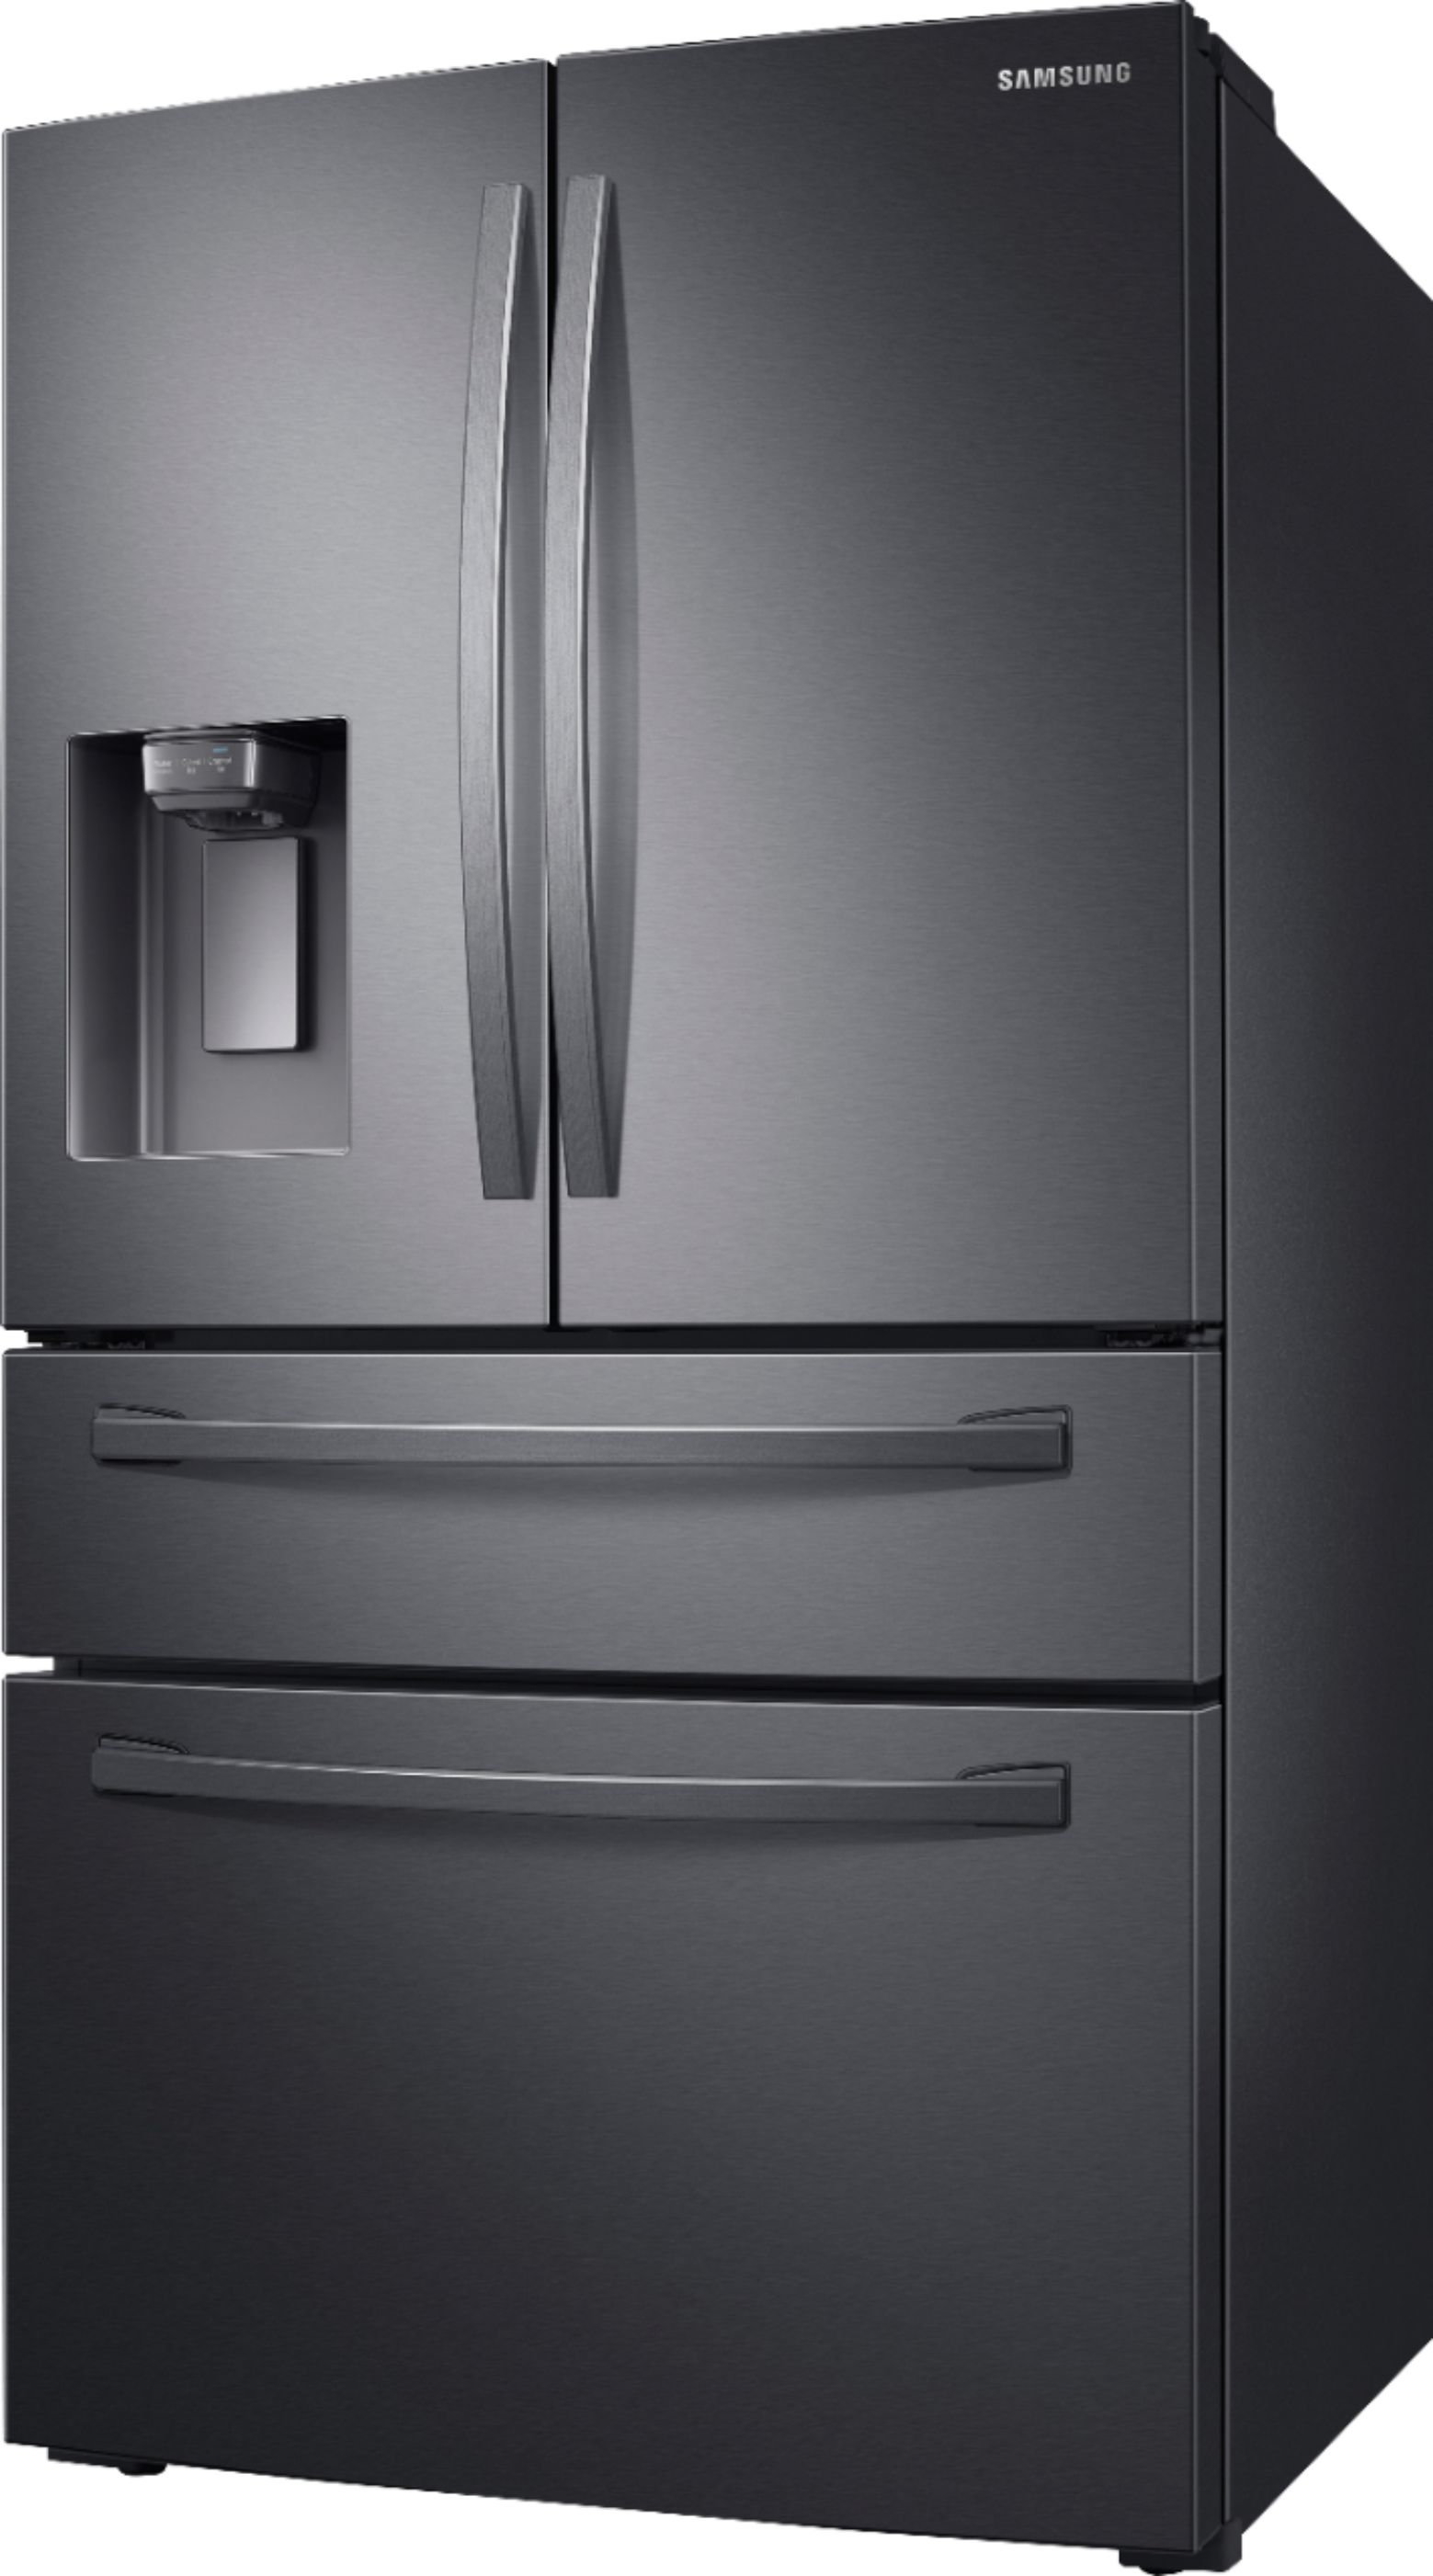 Samsung 28 cu. ft. 4-Door French Door Refrigerator with FlexZone Drawer  Black Stainless Steel RF28R7201SG/AA - Best Buy